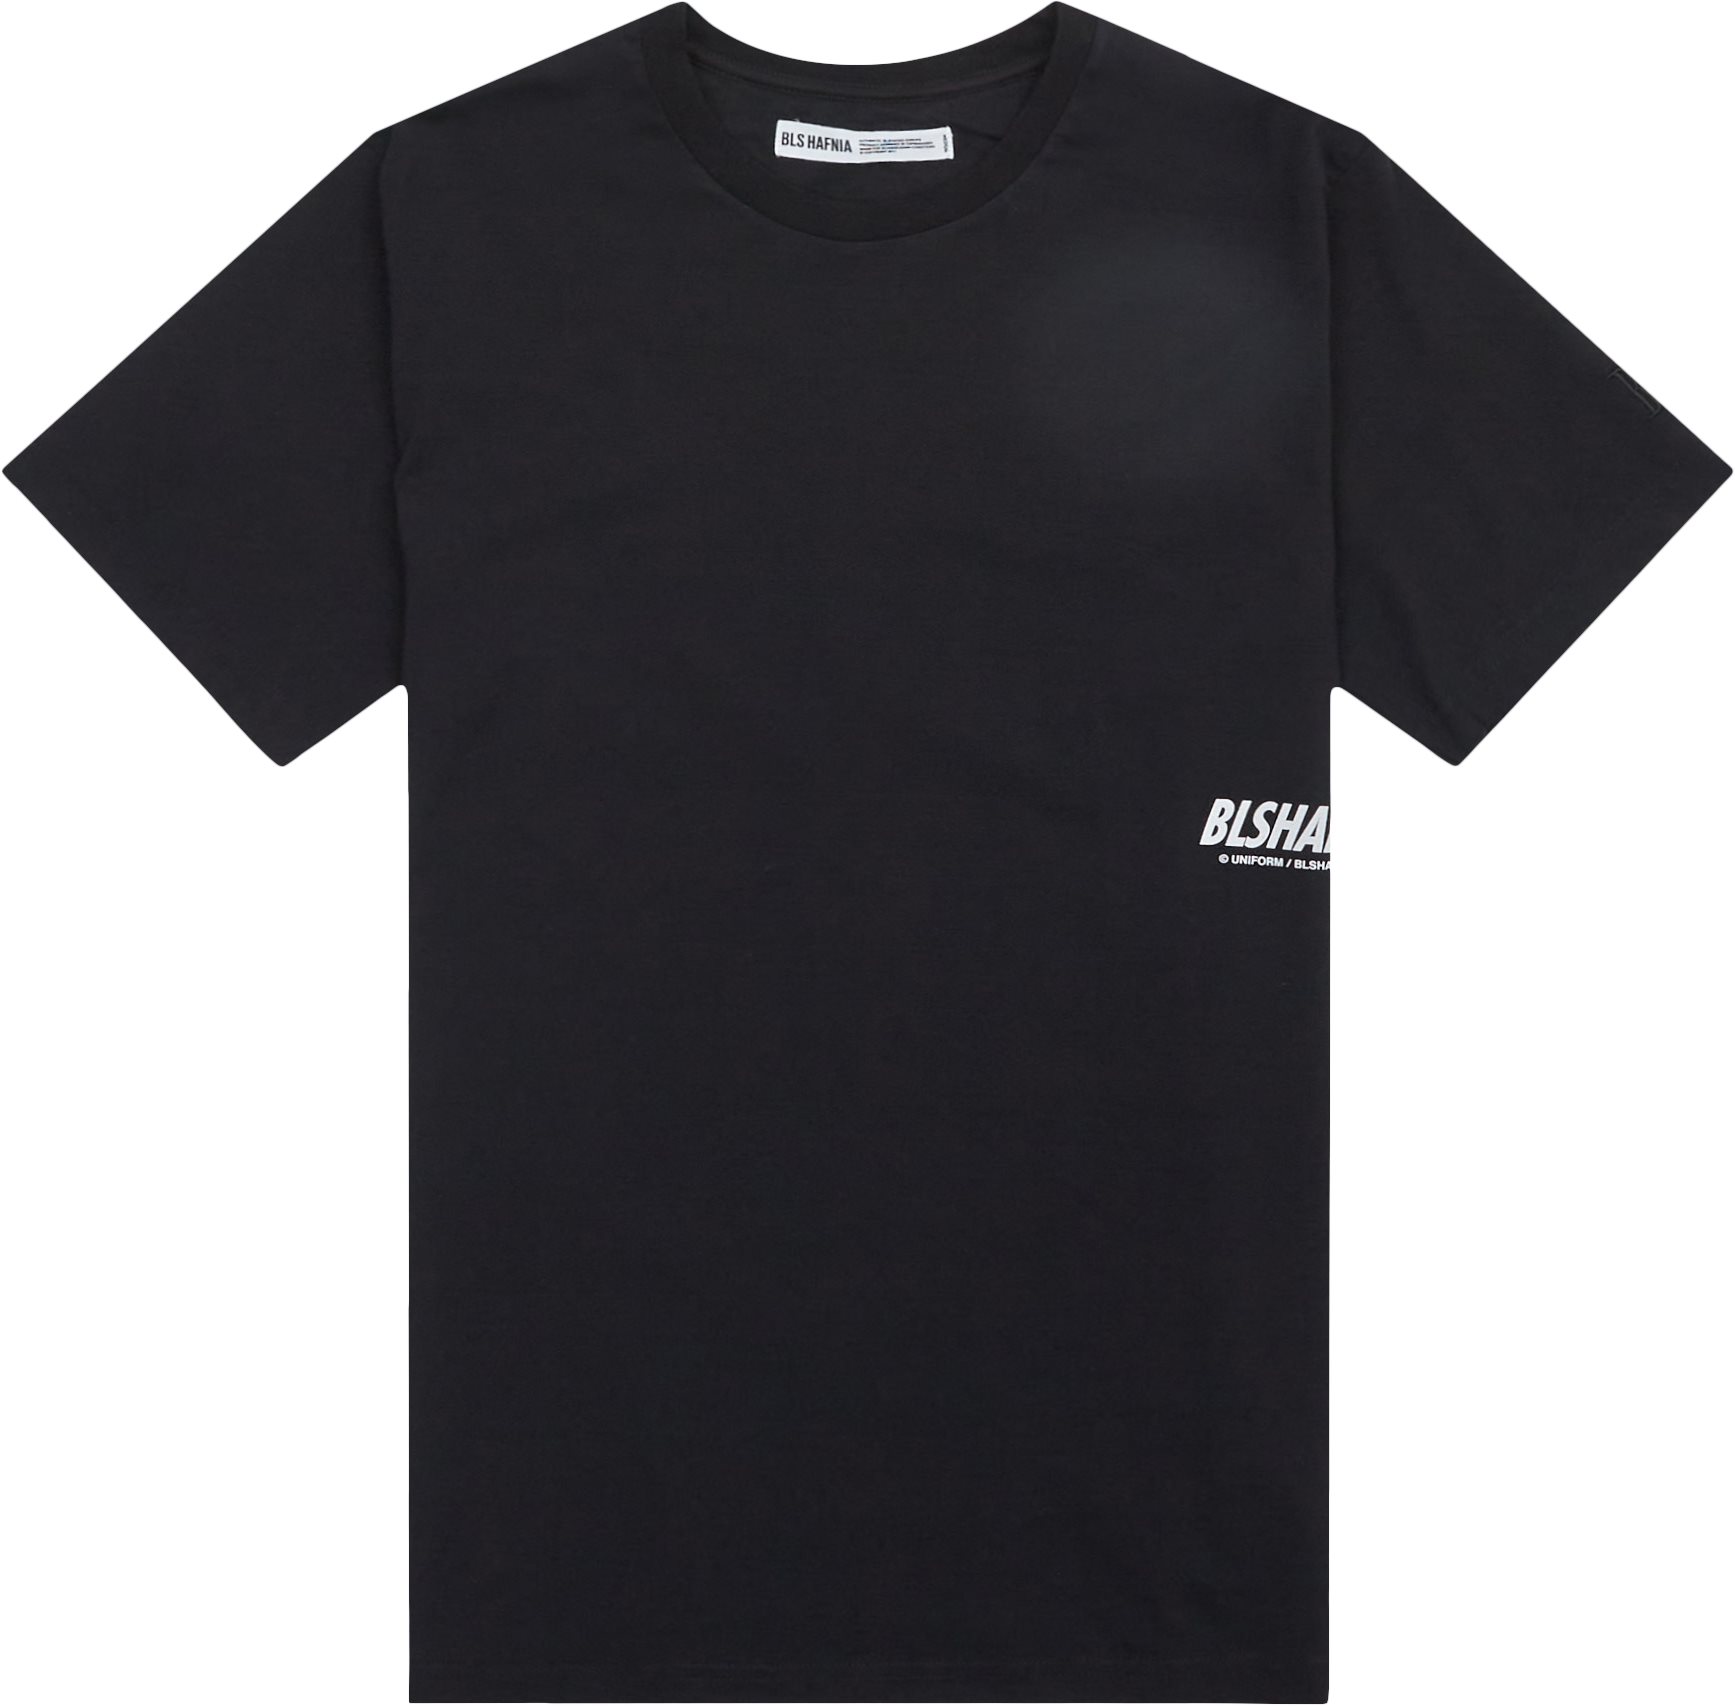 BLS T-shirts SWISH T-SHIRT 202208012 Black